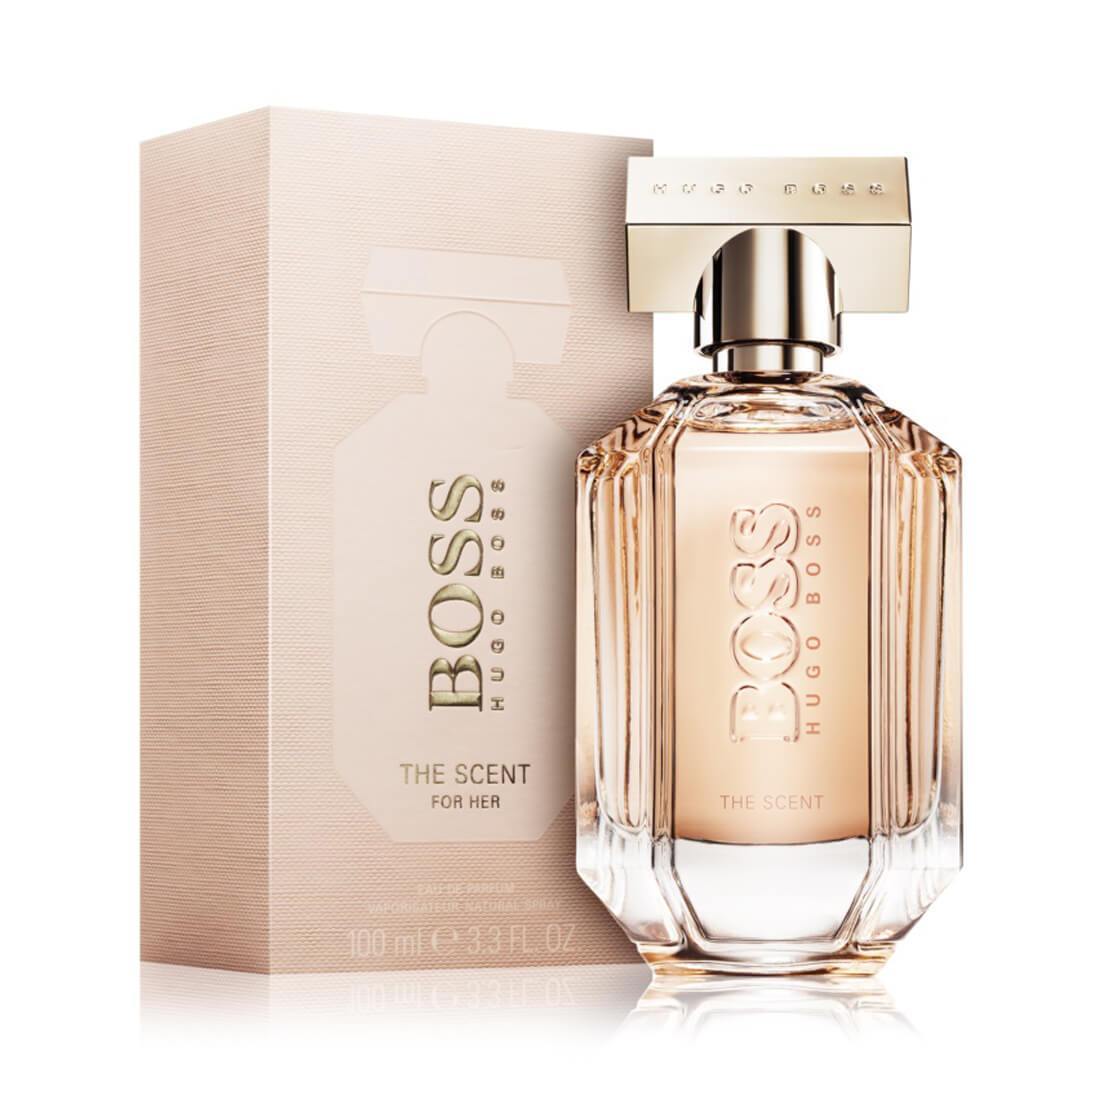 hugo boss essence perfume